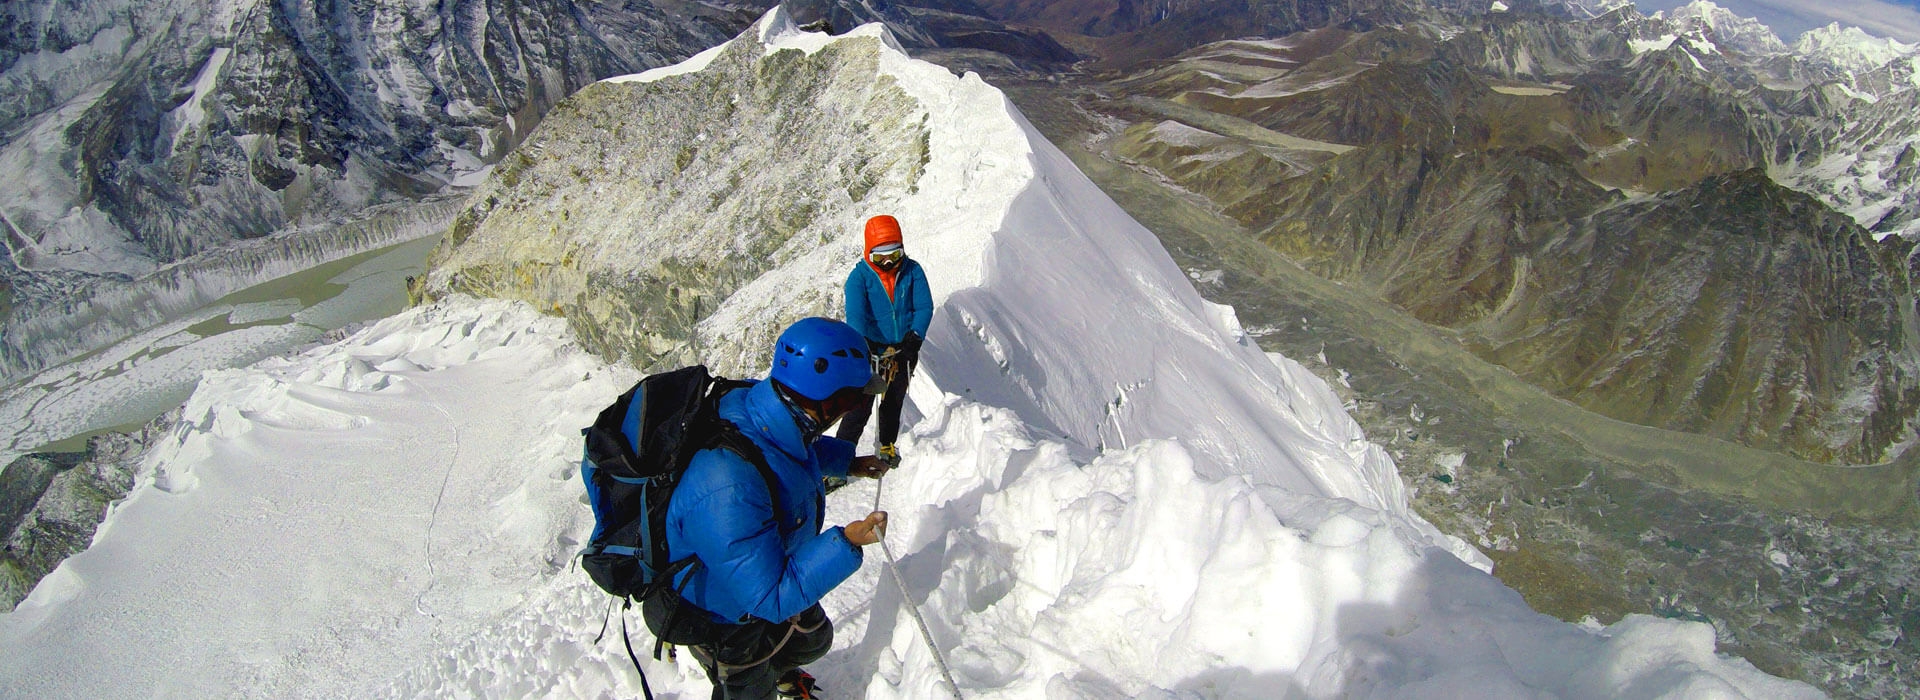 Island peak Climb in Nepal